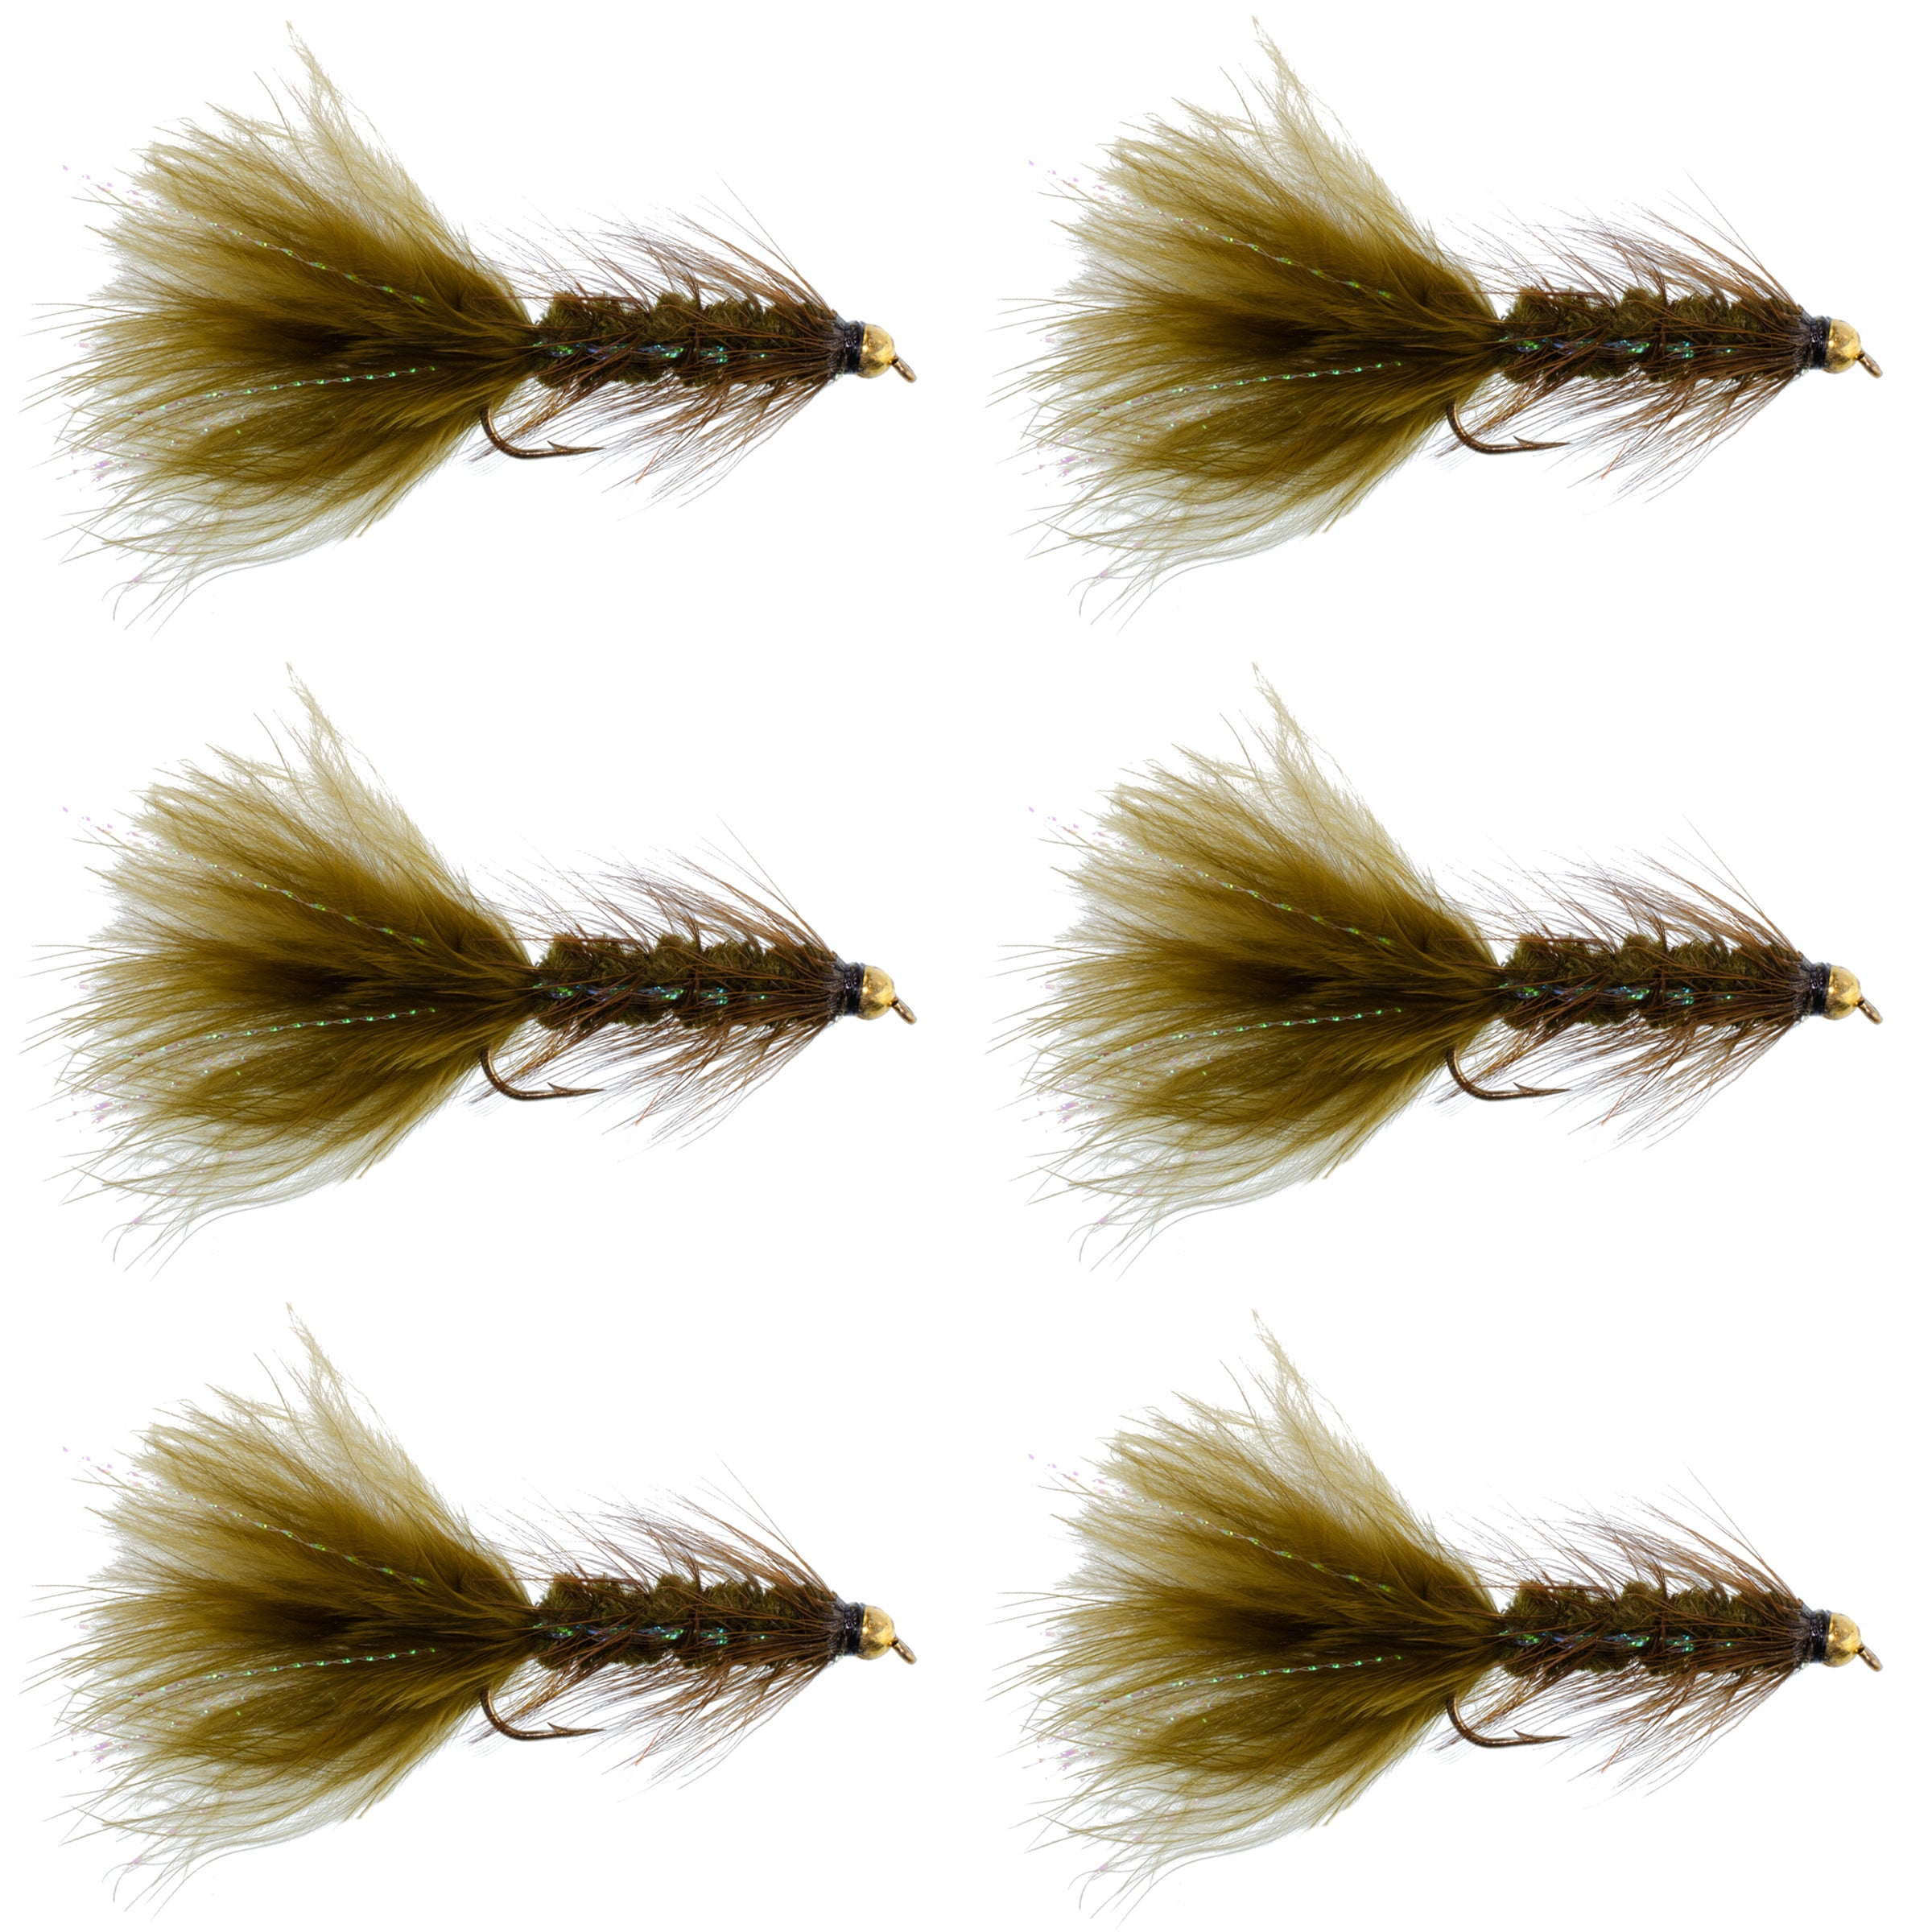 Dark Olive Bead Head Crystal Woolly Bugger Classic Streamer Flies - Set of 6 Trout Fly Fishing Flies - Hook Size 8